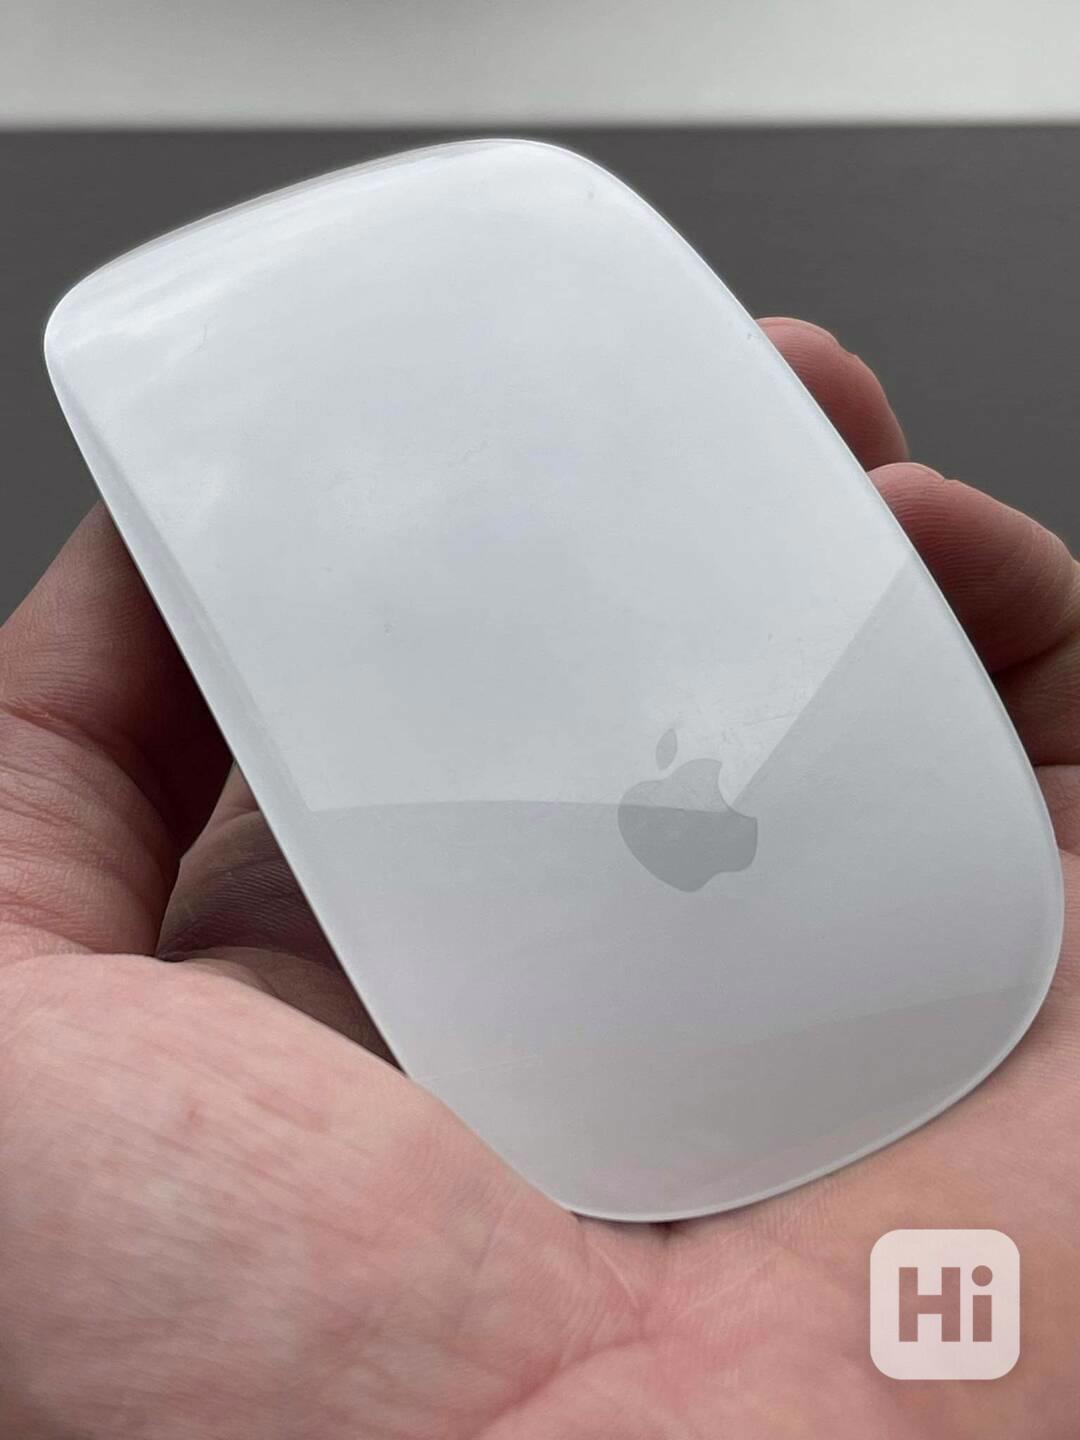 Apple magic mouse 2 - foto 1